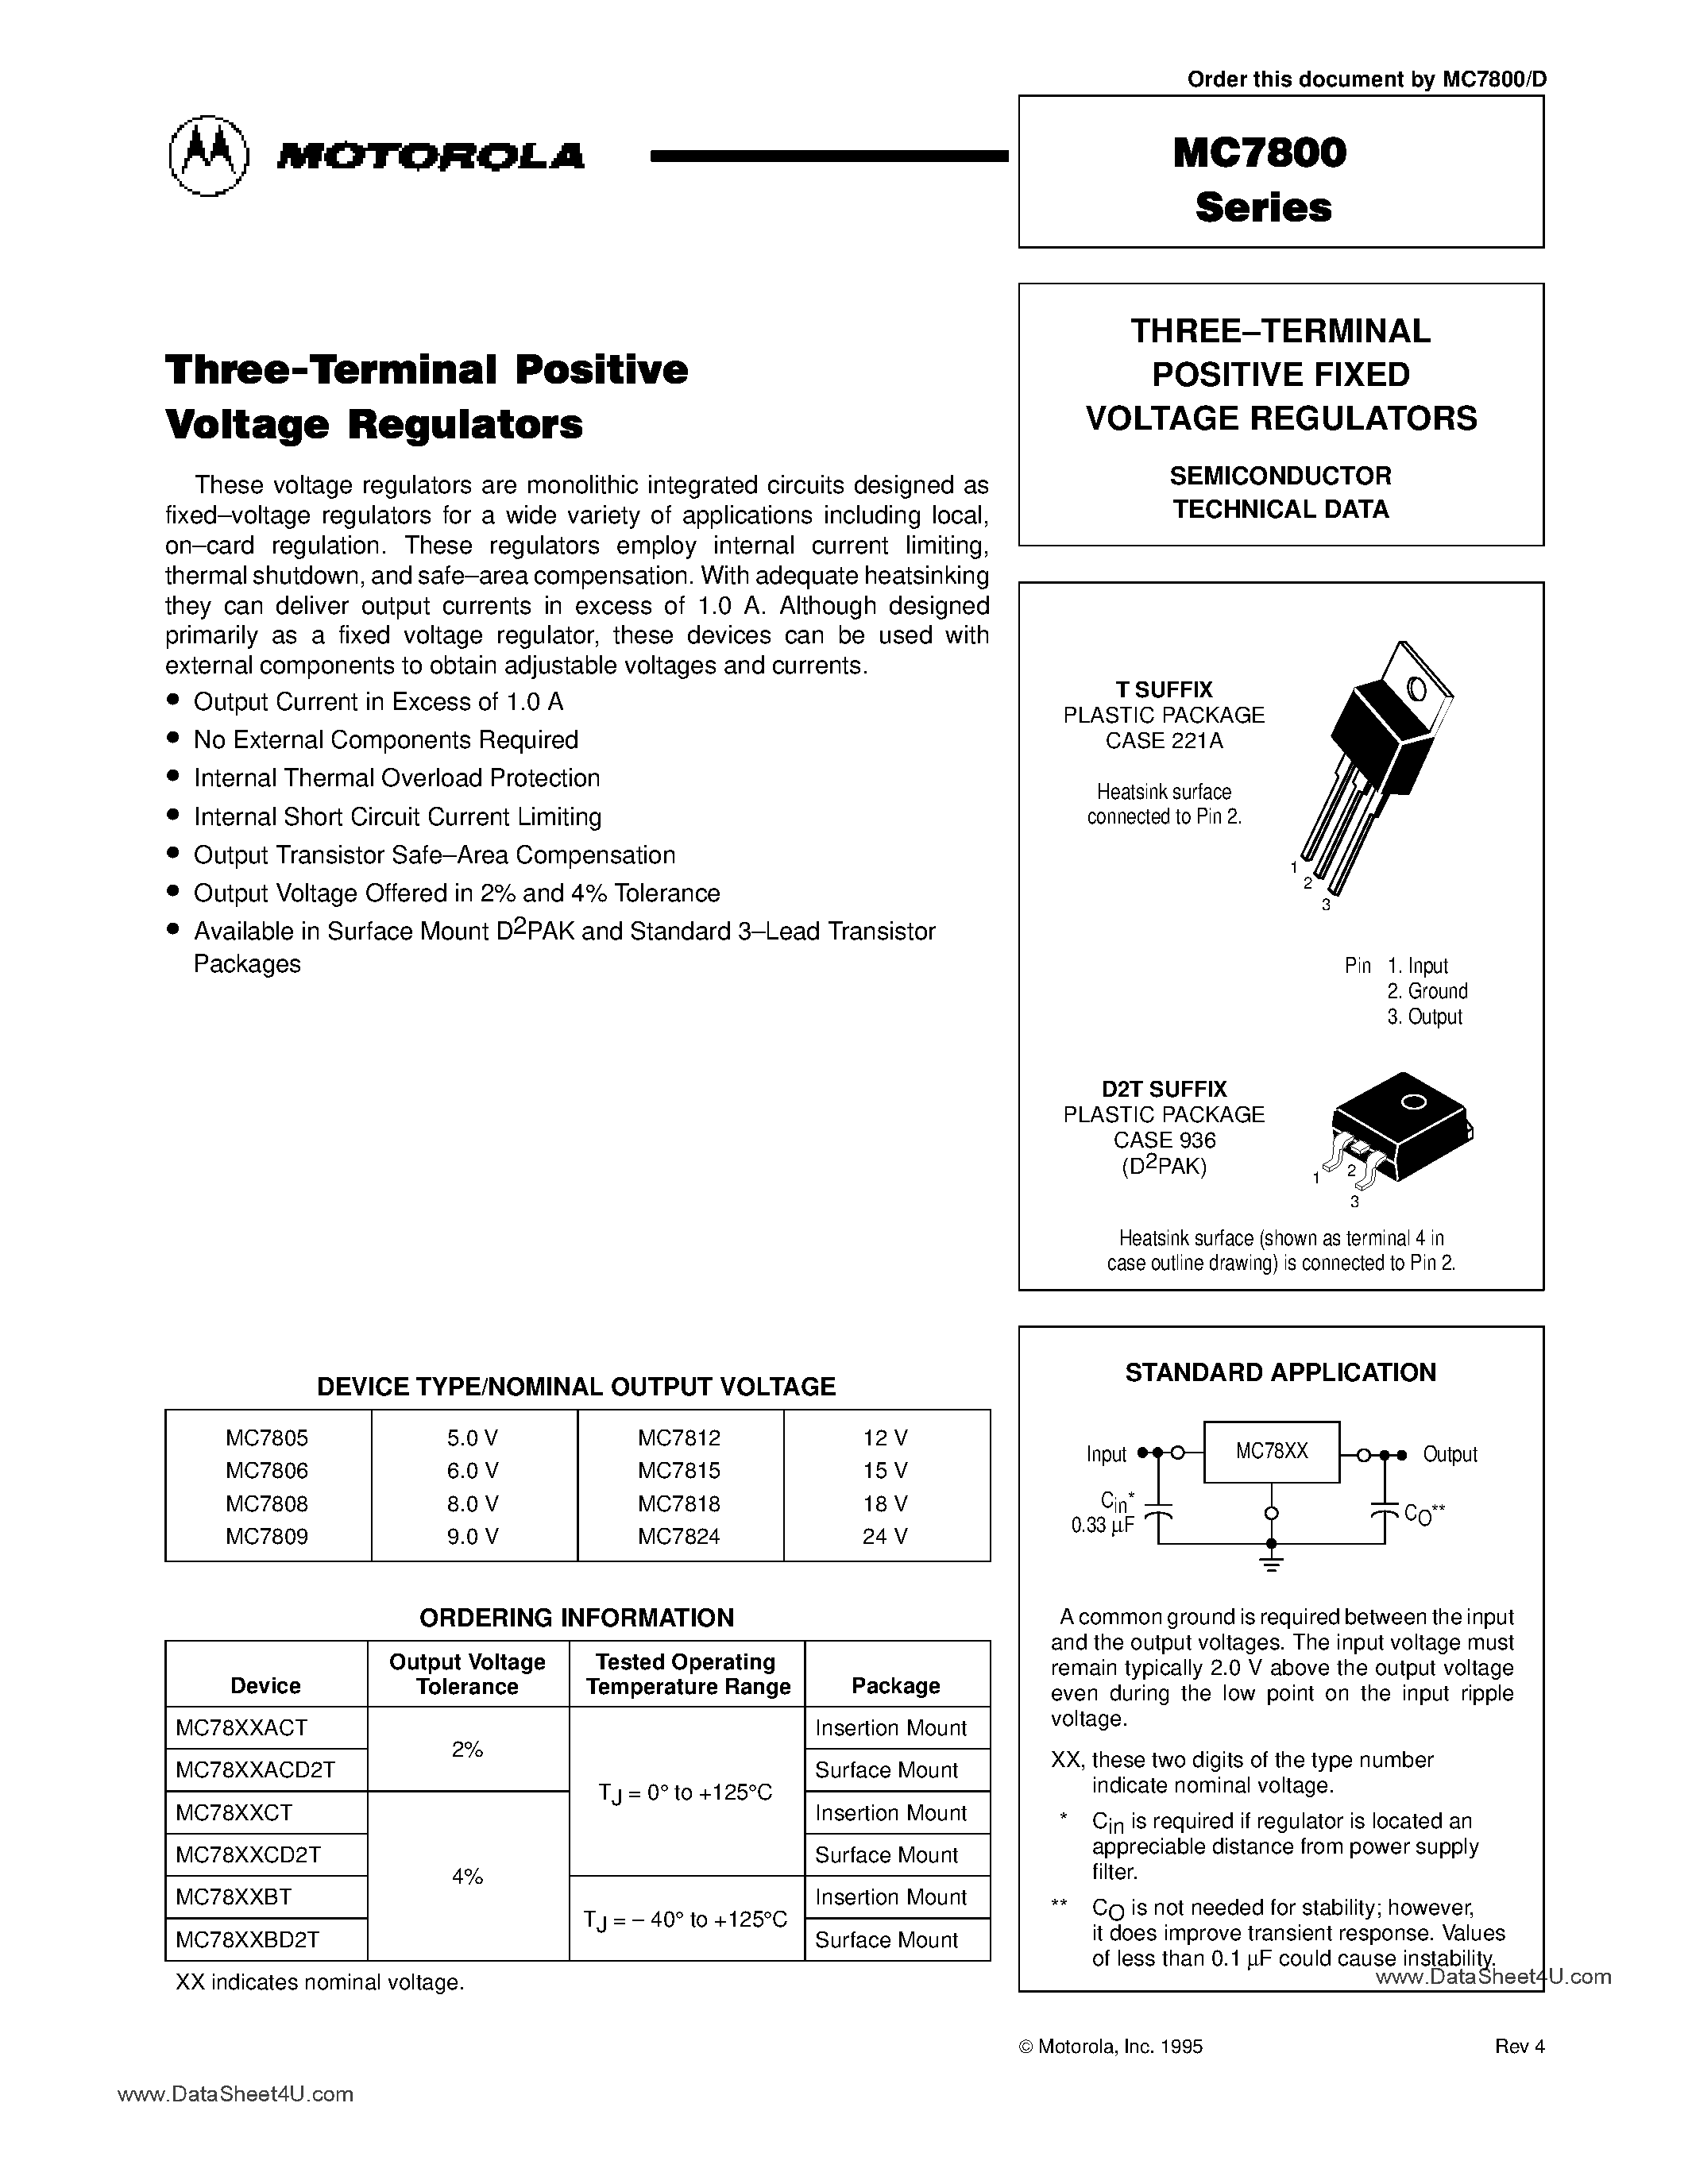 Datasheet MC7805 - (MC7800 Series) Three Terminal Positive Fixed Voltage Regulators page 1